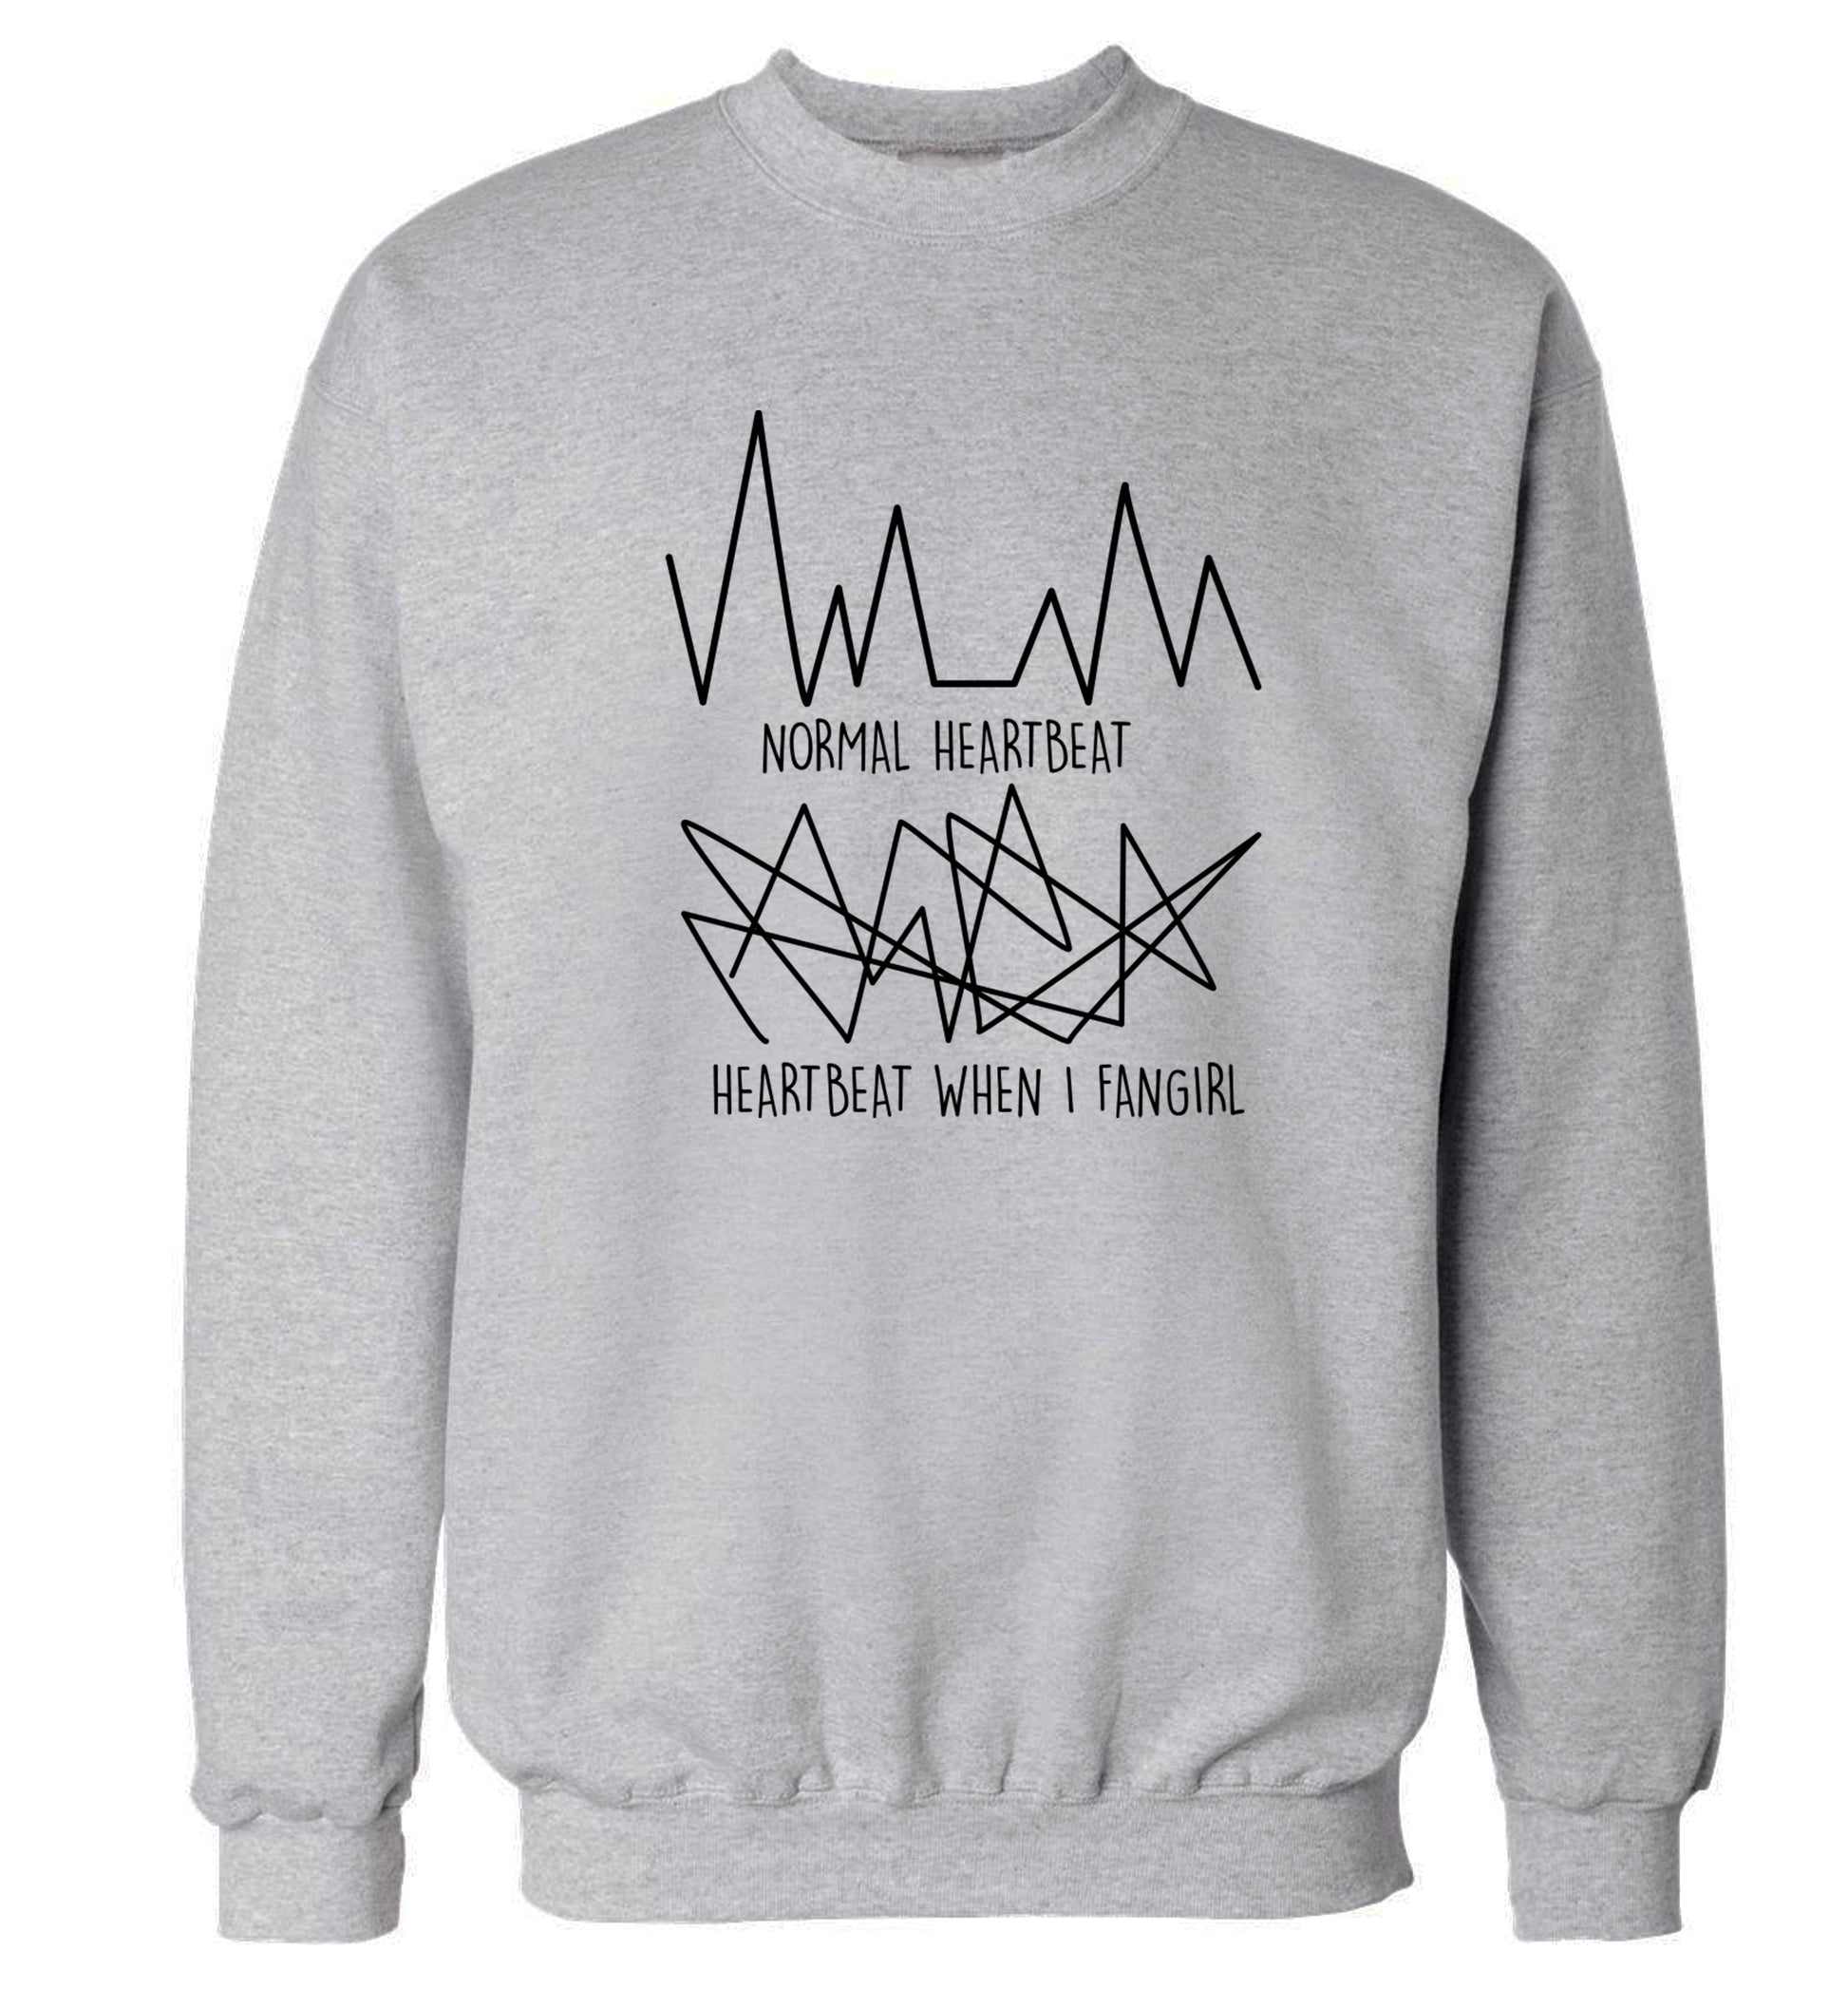 Normal heartbeat heartbeat when I fangirl Adult's unisex grey Sweater 2XL